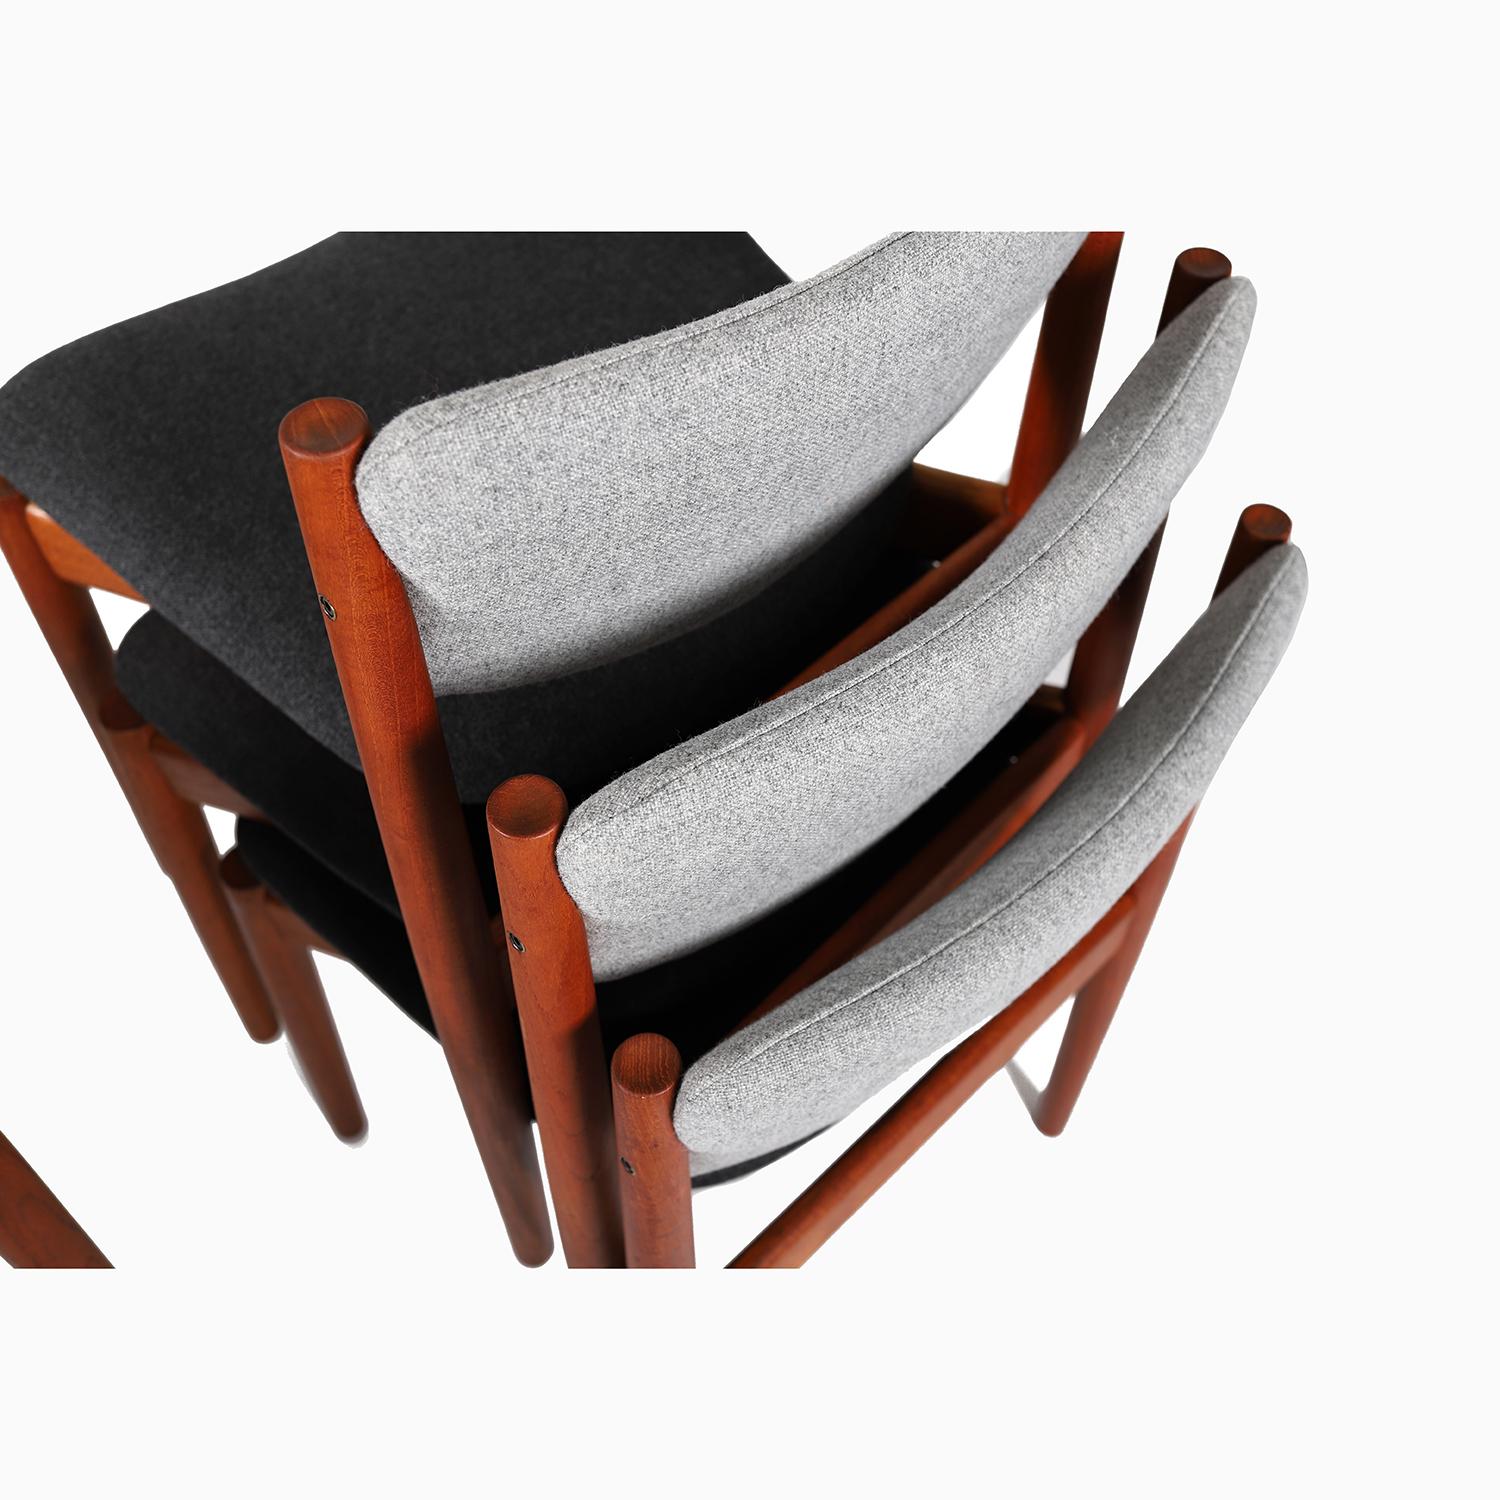 Danish Modern Teak Dining Chairs by Finn Juhl 1